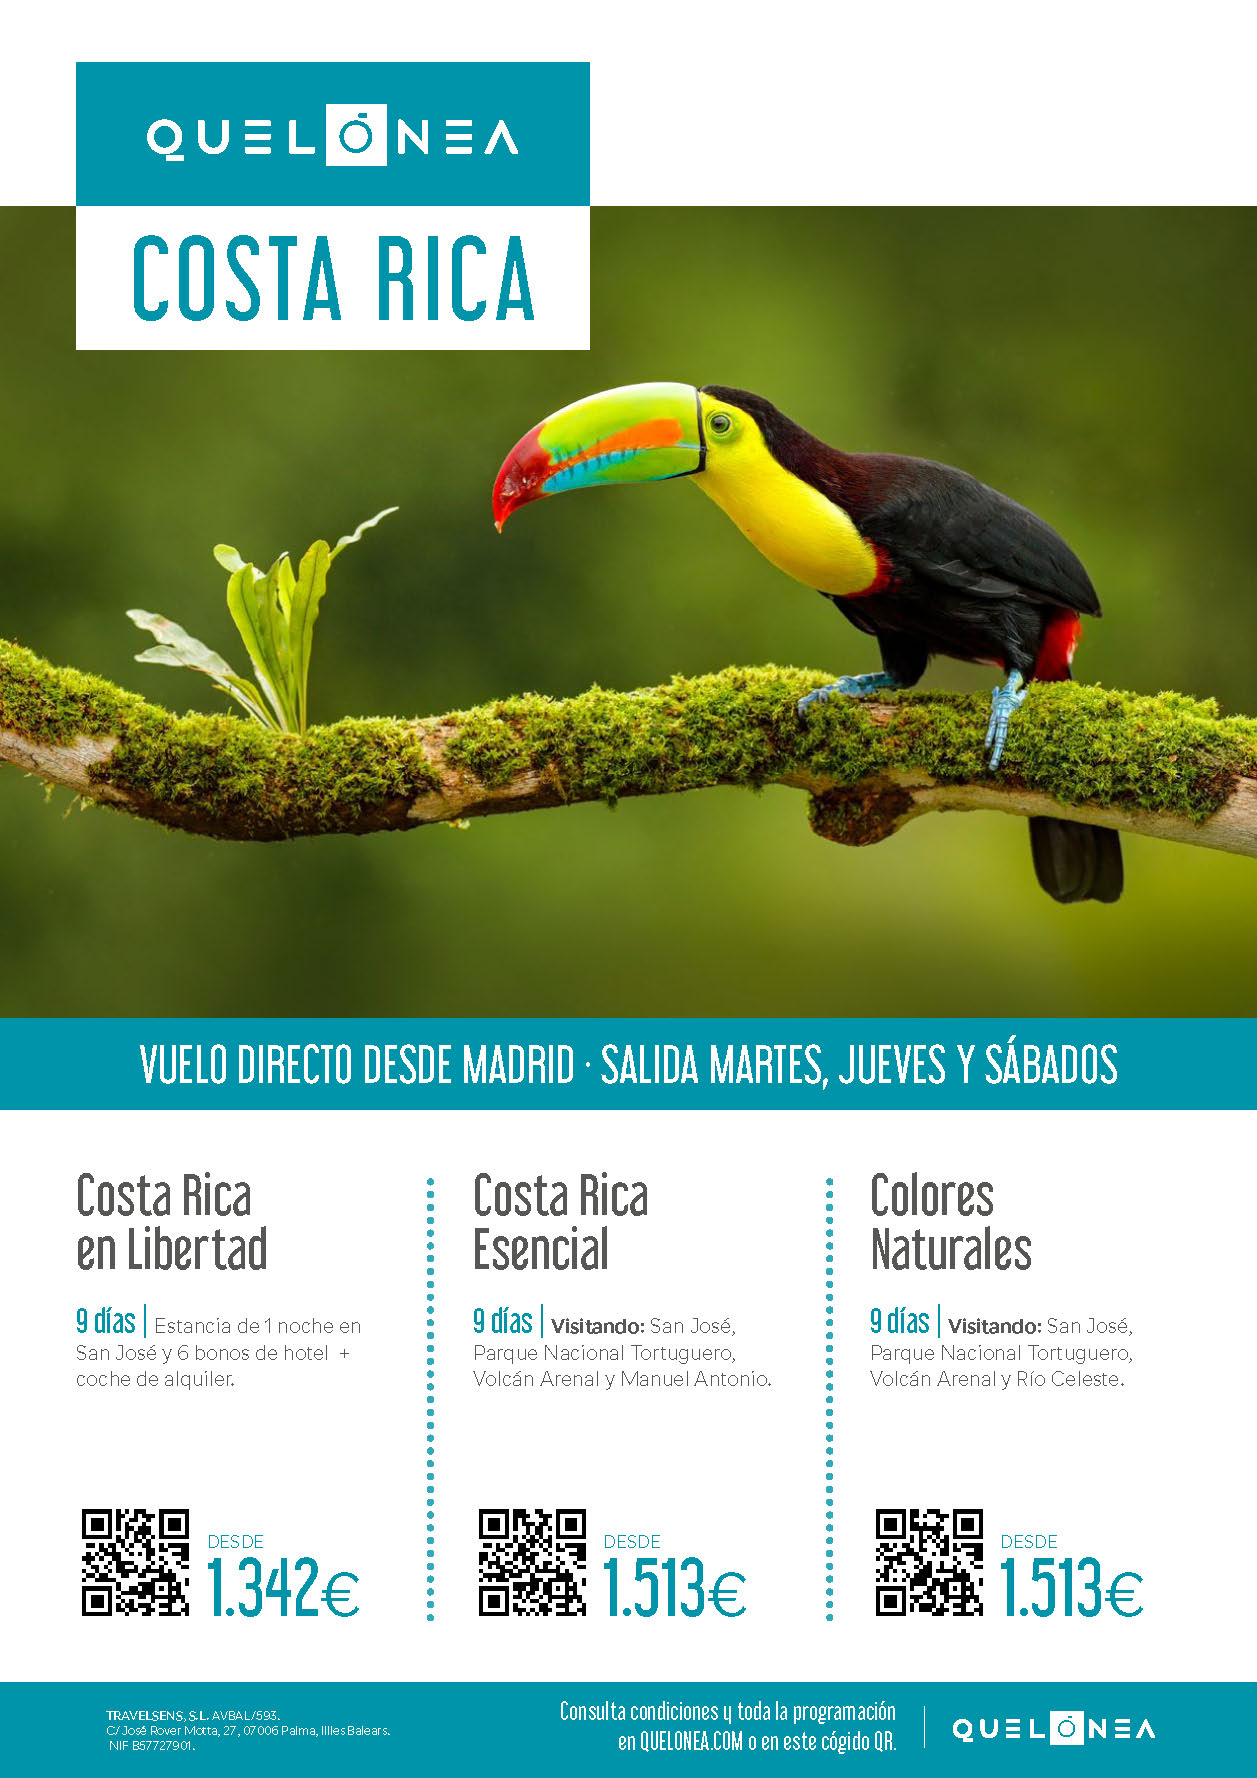 Ofertas Quelonea Costa Rica en Libertad Costa Rica Esencial Colores Naturales 2022 9 dias vuelo directo desde Madrid